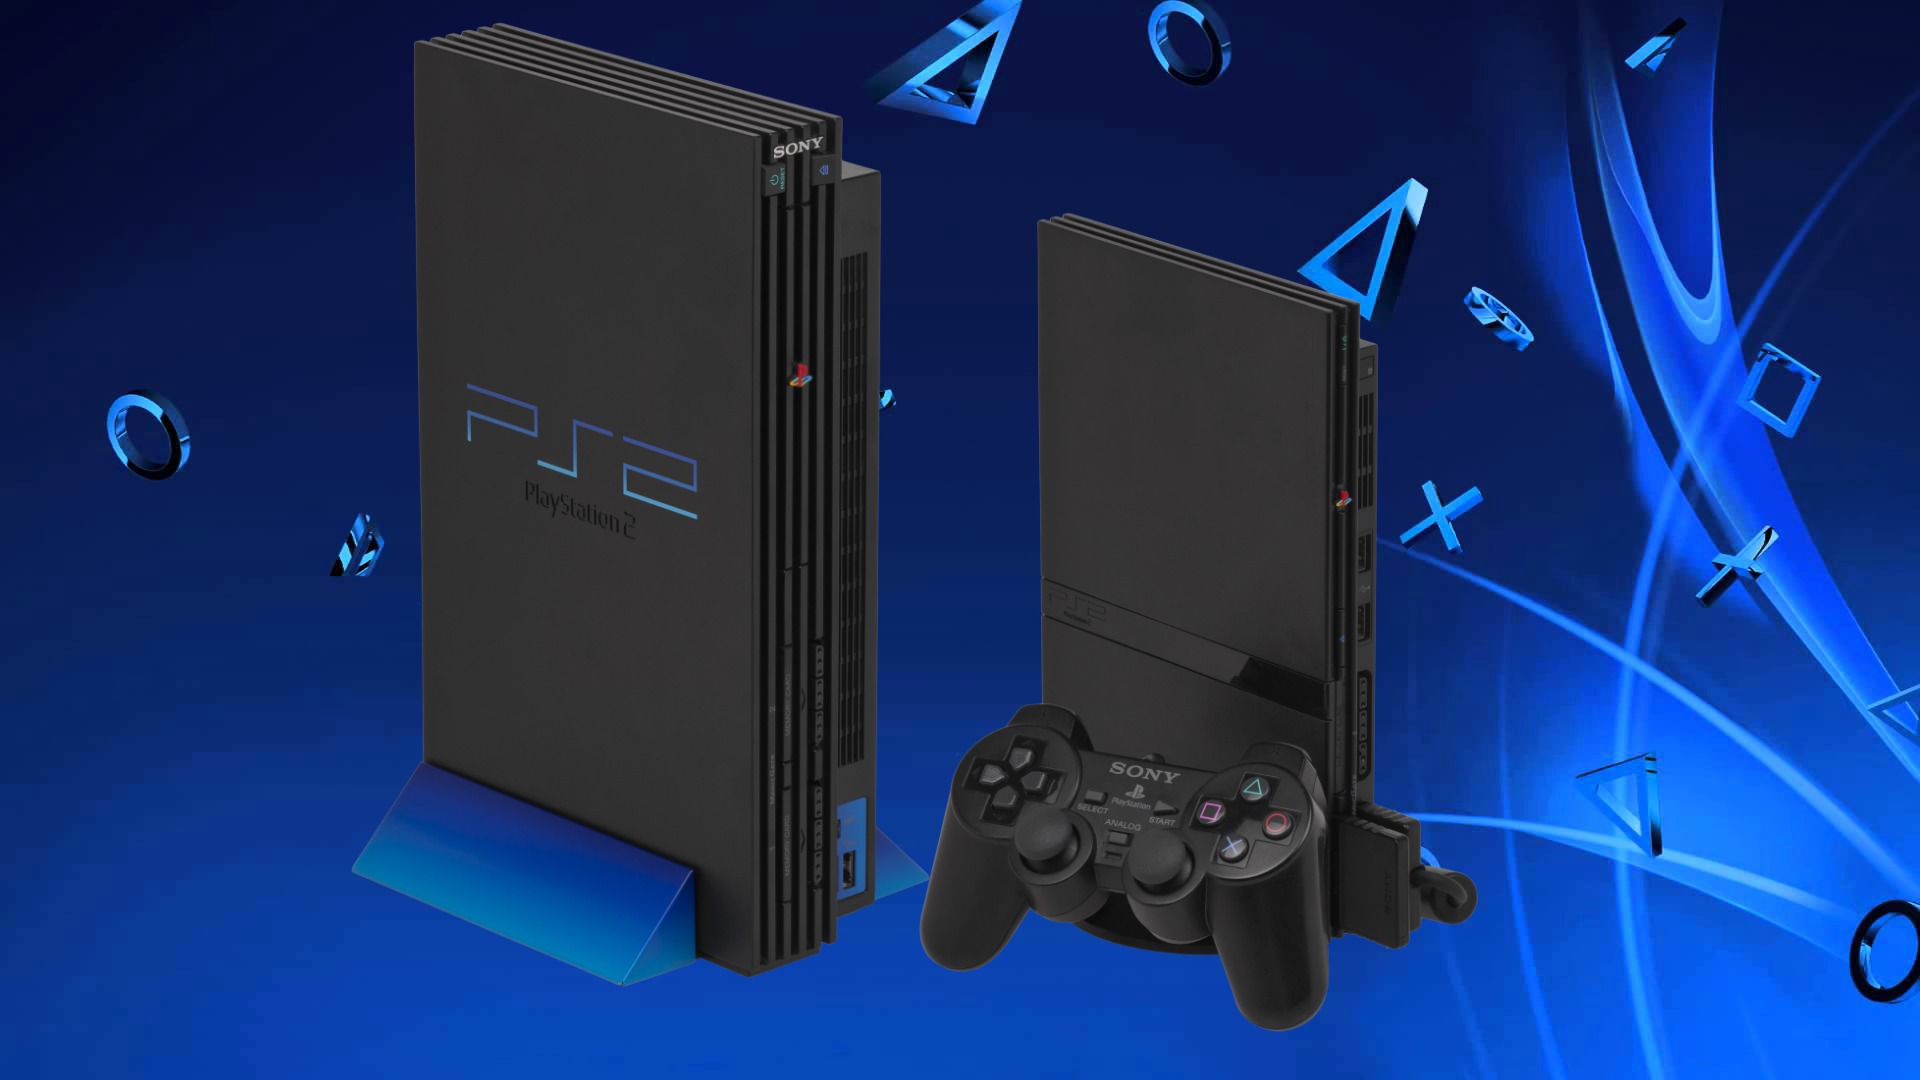 43 ideias de PlayStation 2  jogos ps2, jogos de playstation